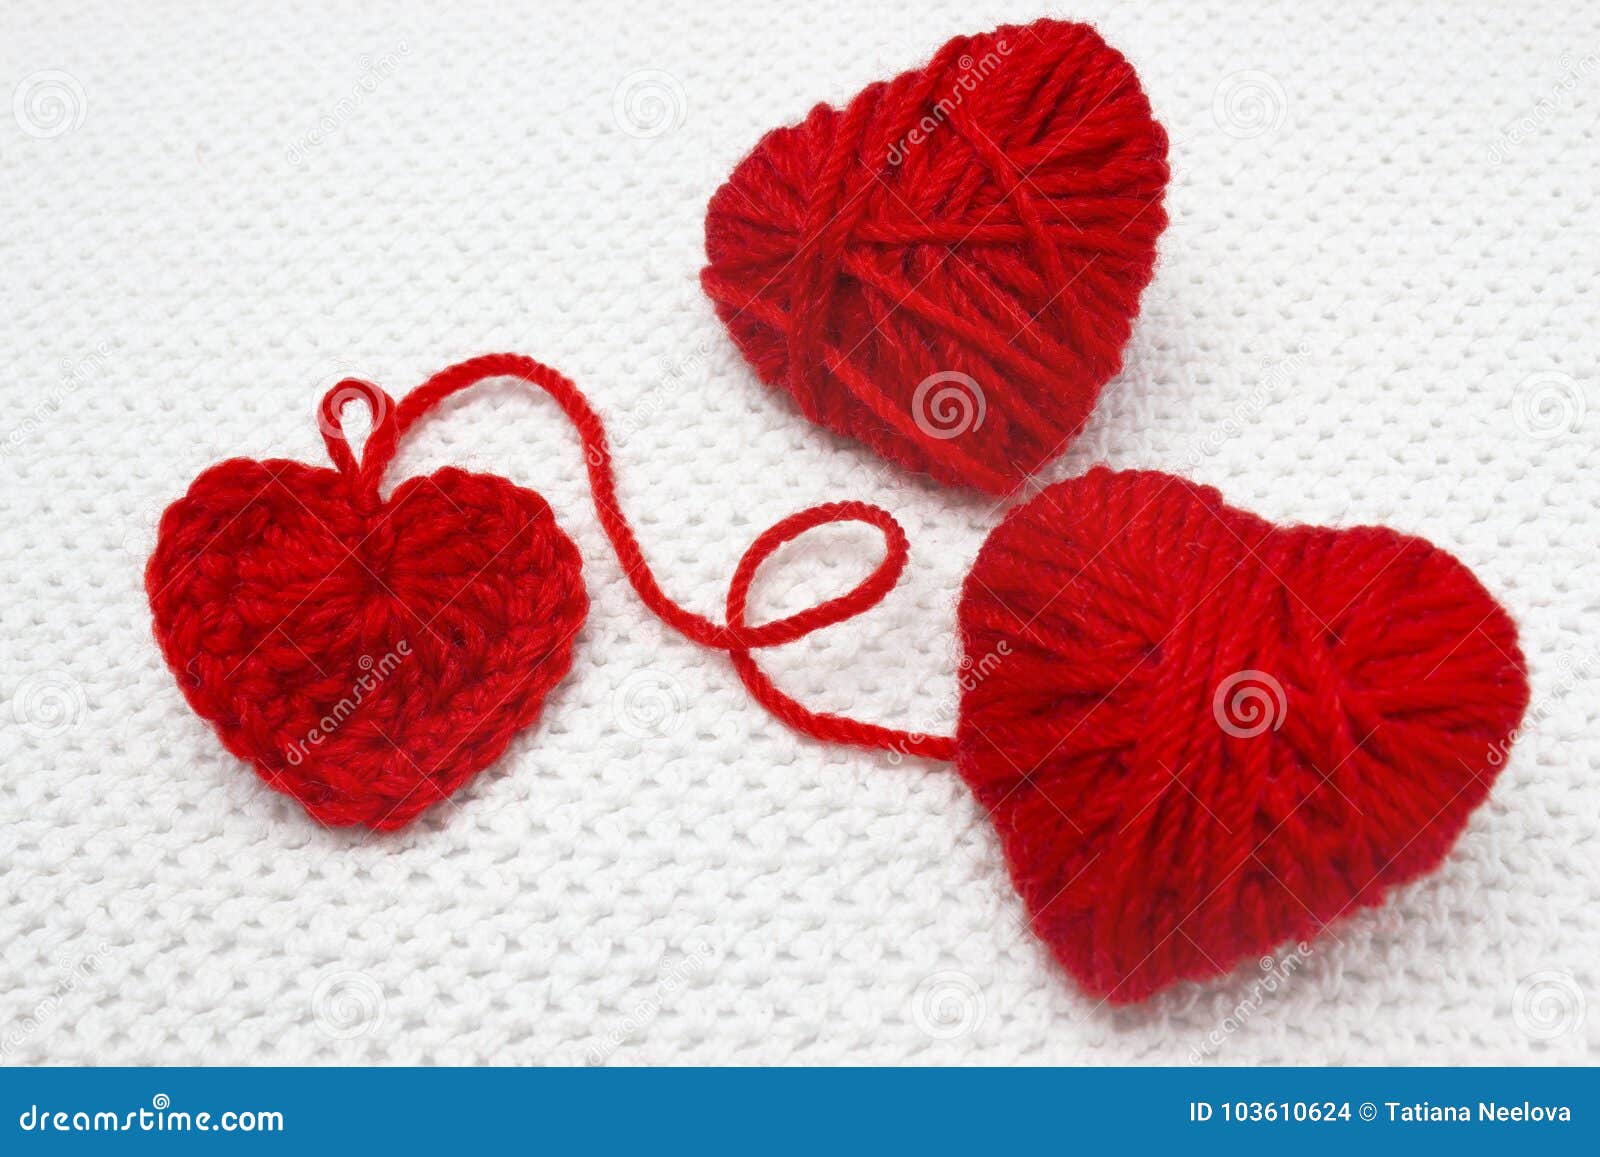 Red Heart Made of Wool Yarn and Crochet Heart. Soft Focus. Handmade  Crocheted Wool Organic Red Heart Stock Photo - Image of knitting, elegance:  103610624